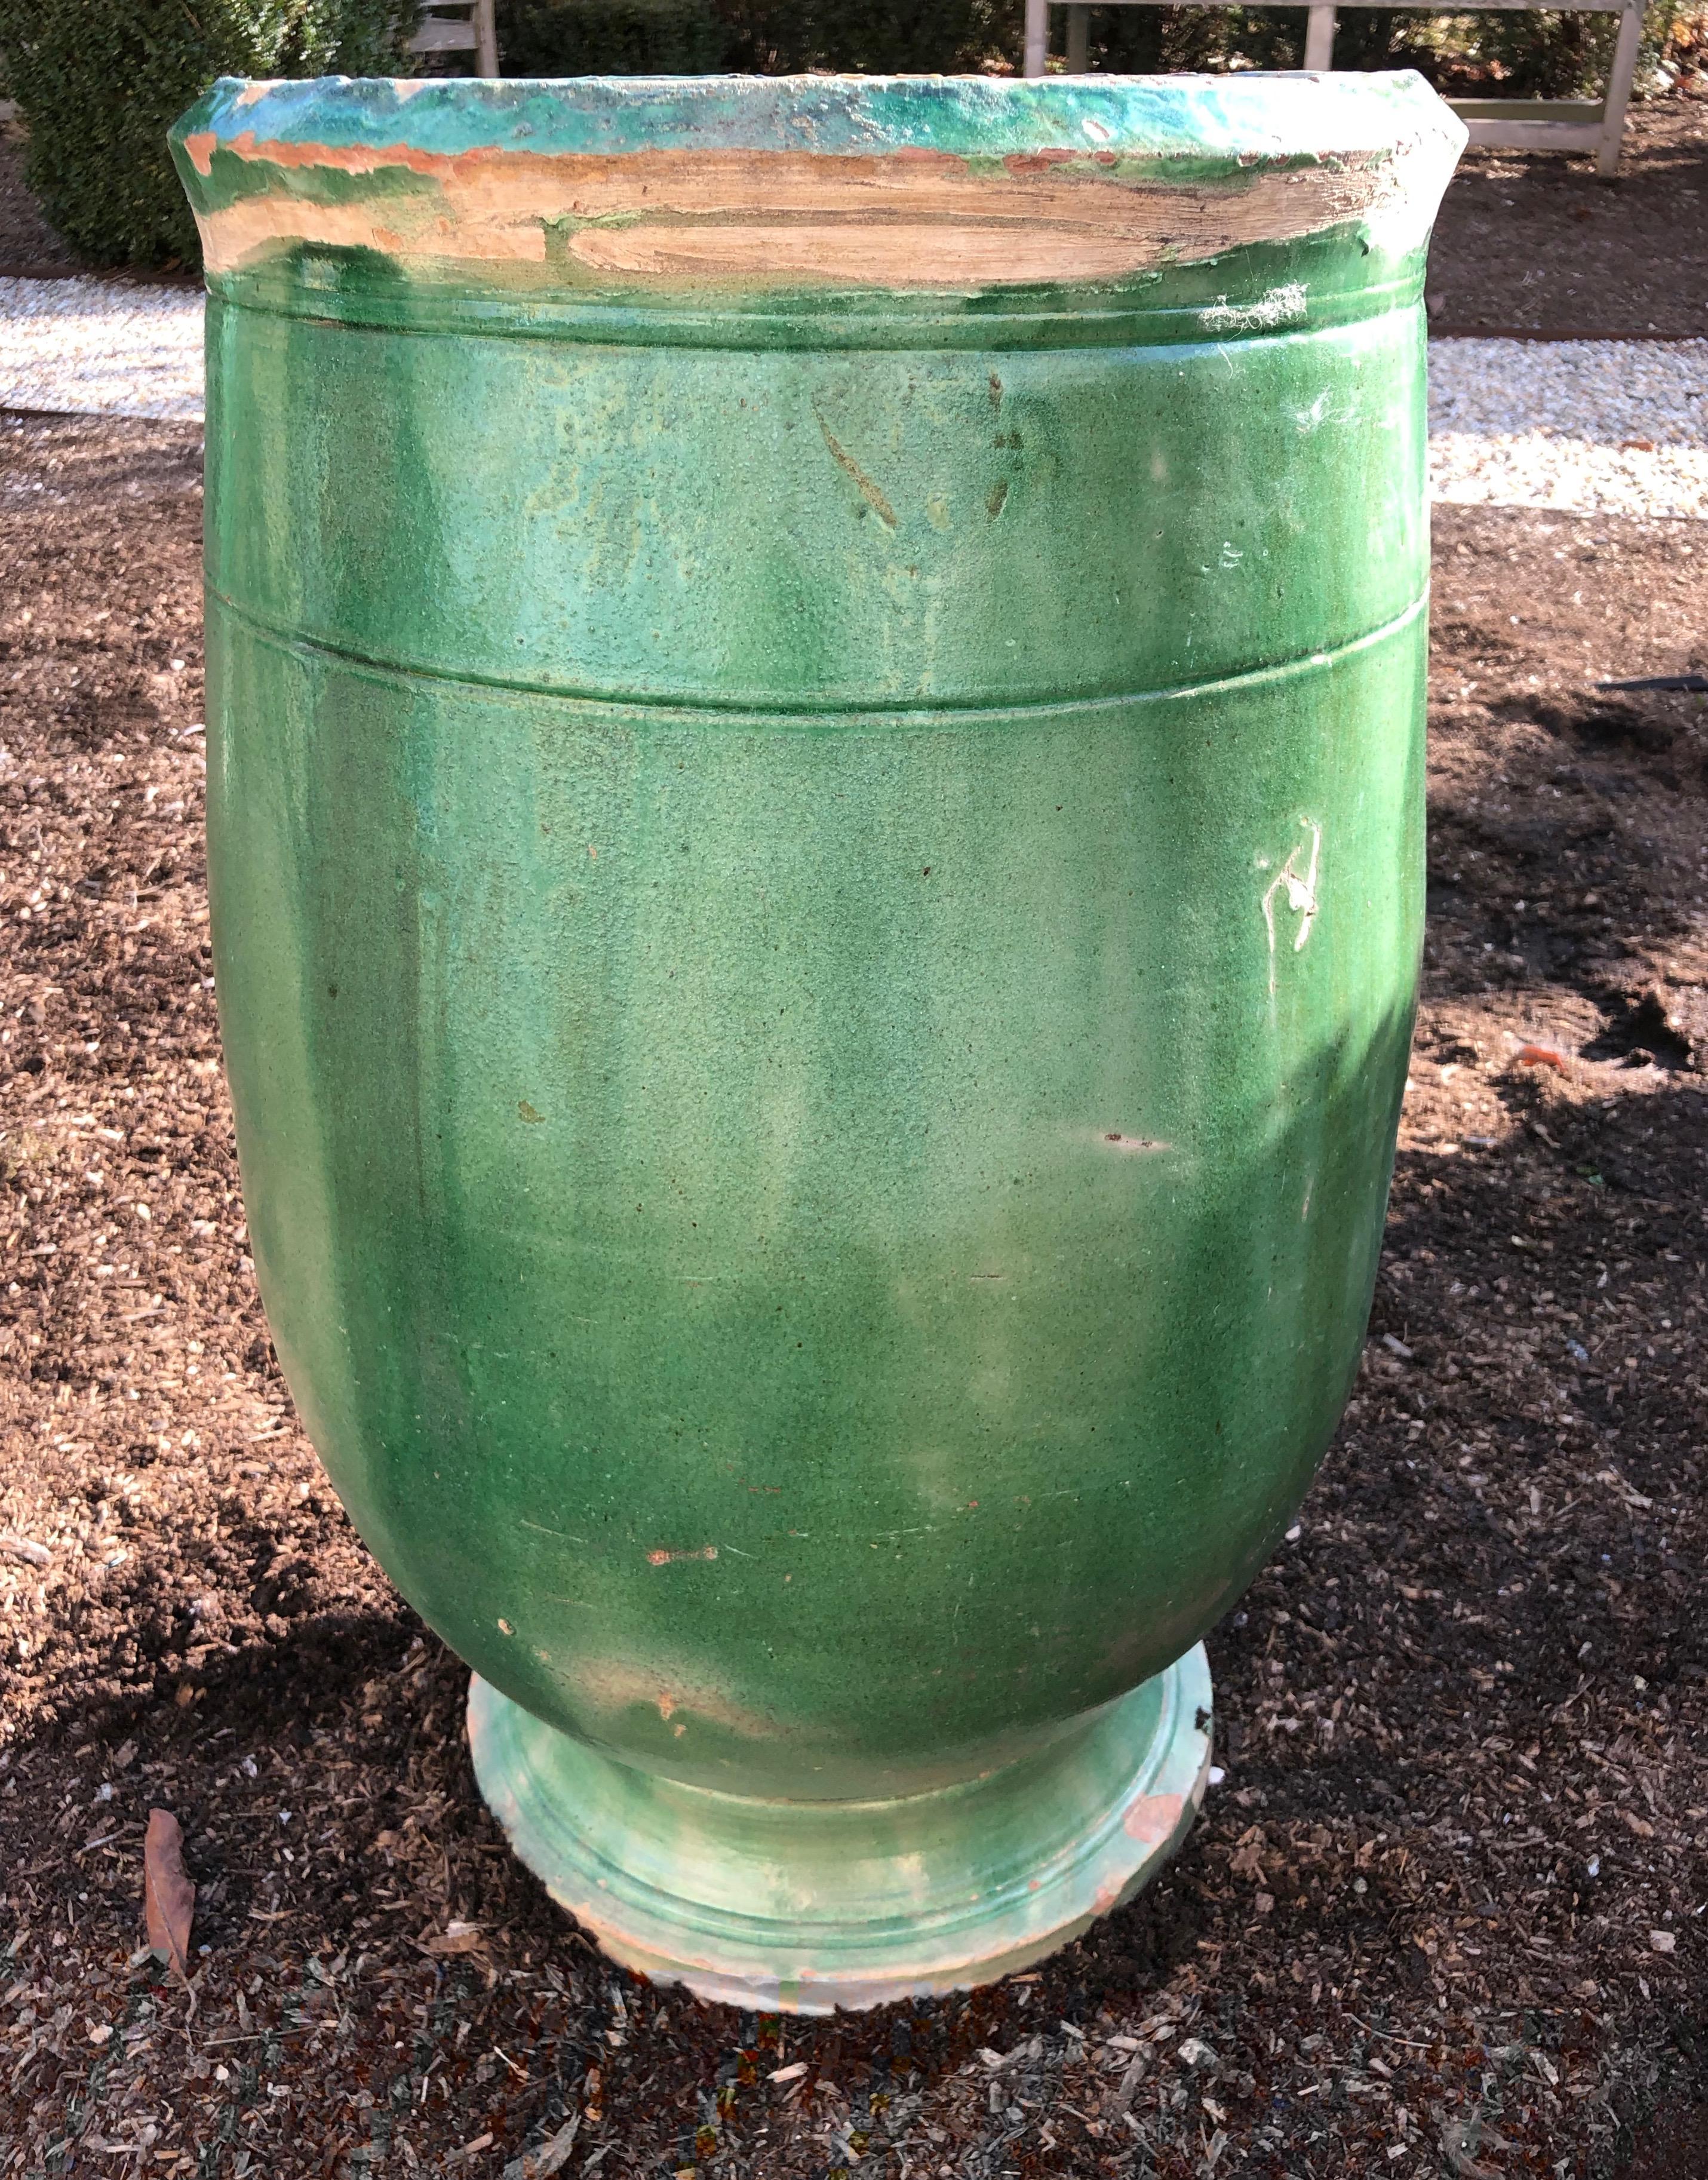 French 19th Century Green-Glazed Terracotta Pot from Apt 2